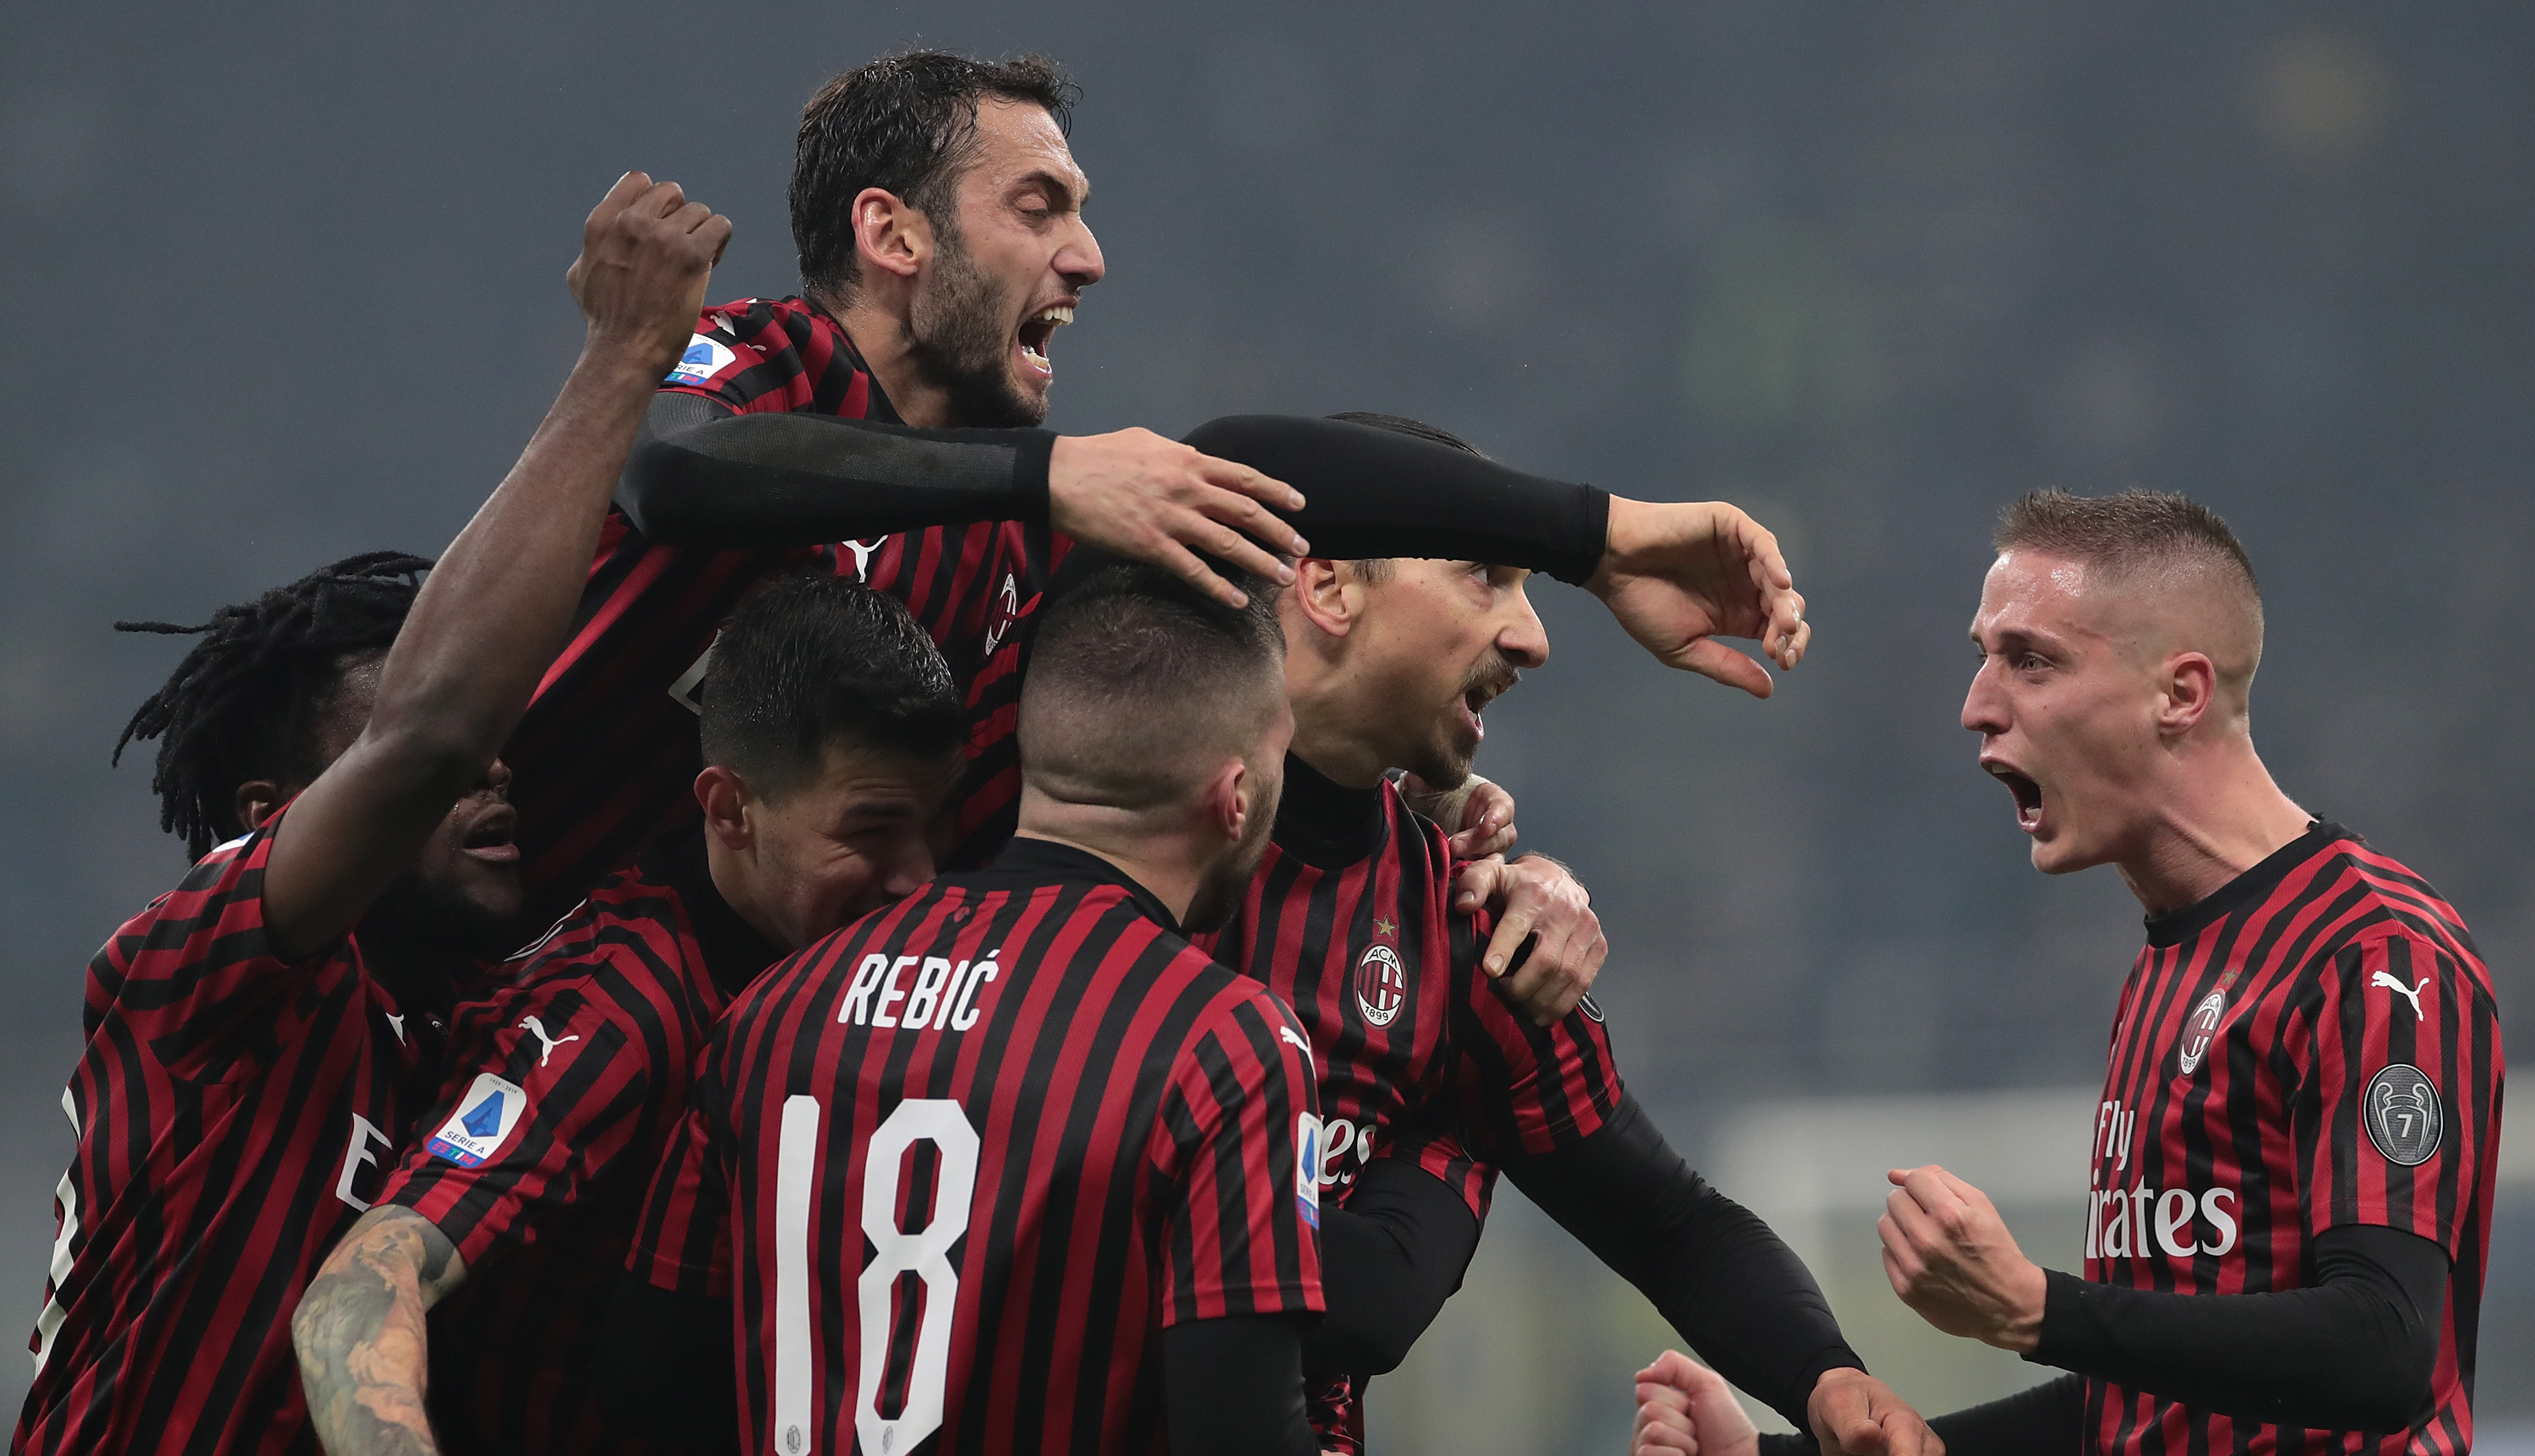 AC Milan Vs Inter Highlights: Zlatan Ibrahimovic Stars Early, But Inter